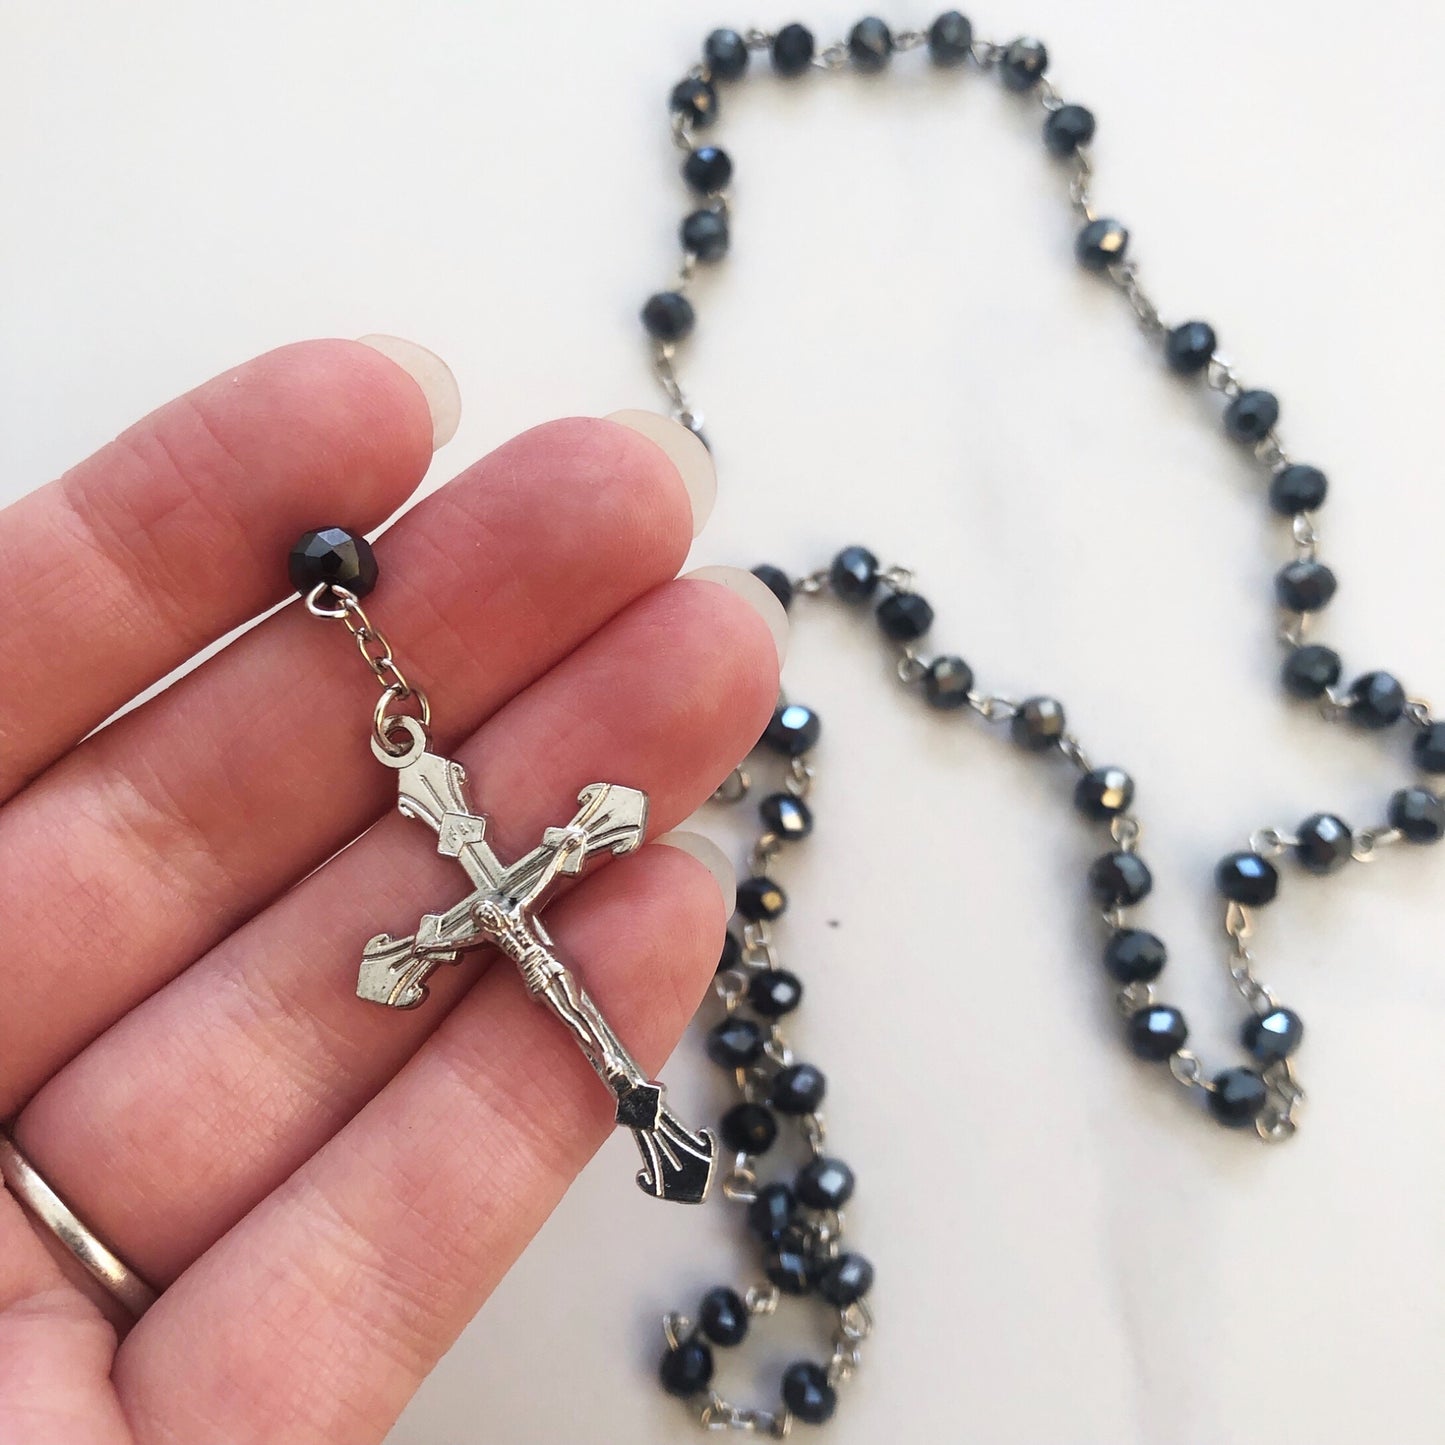 Rosary Beads: Crystal Black / Blue